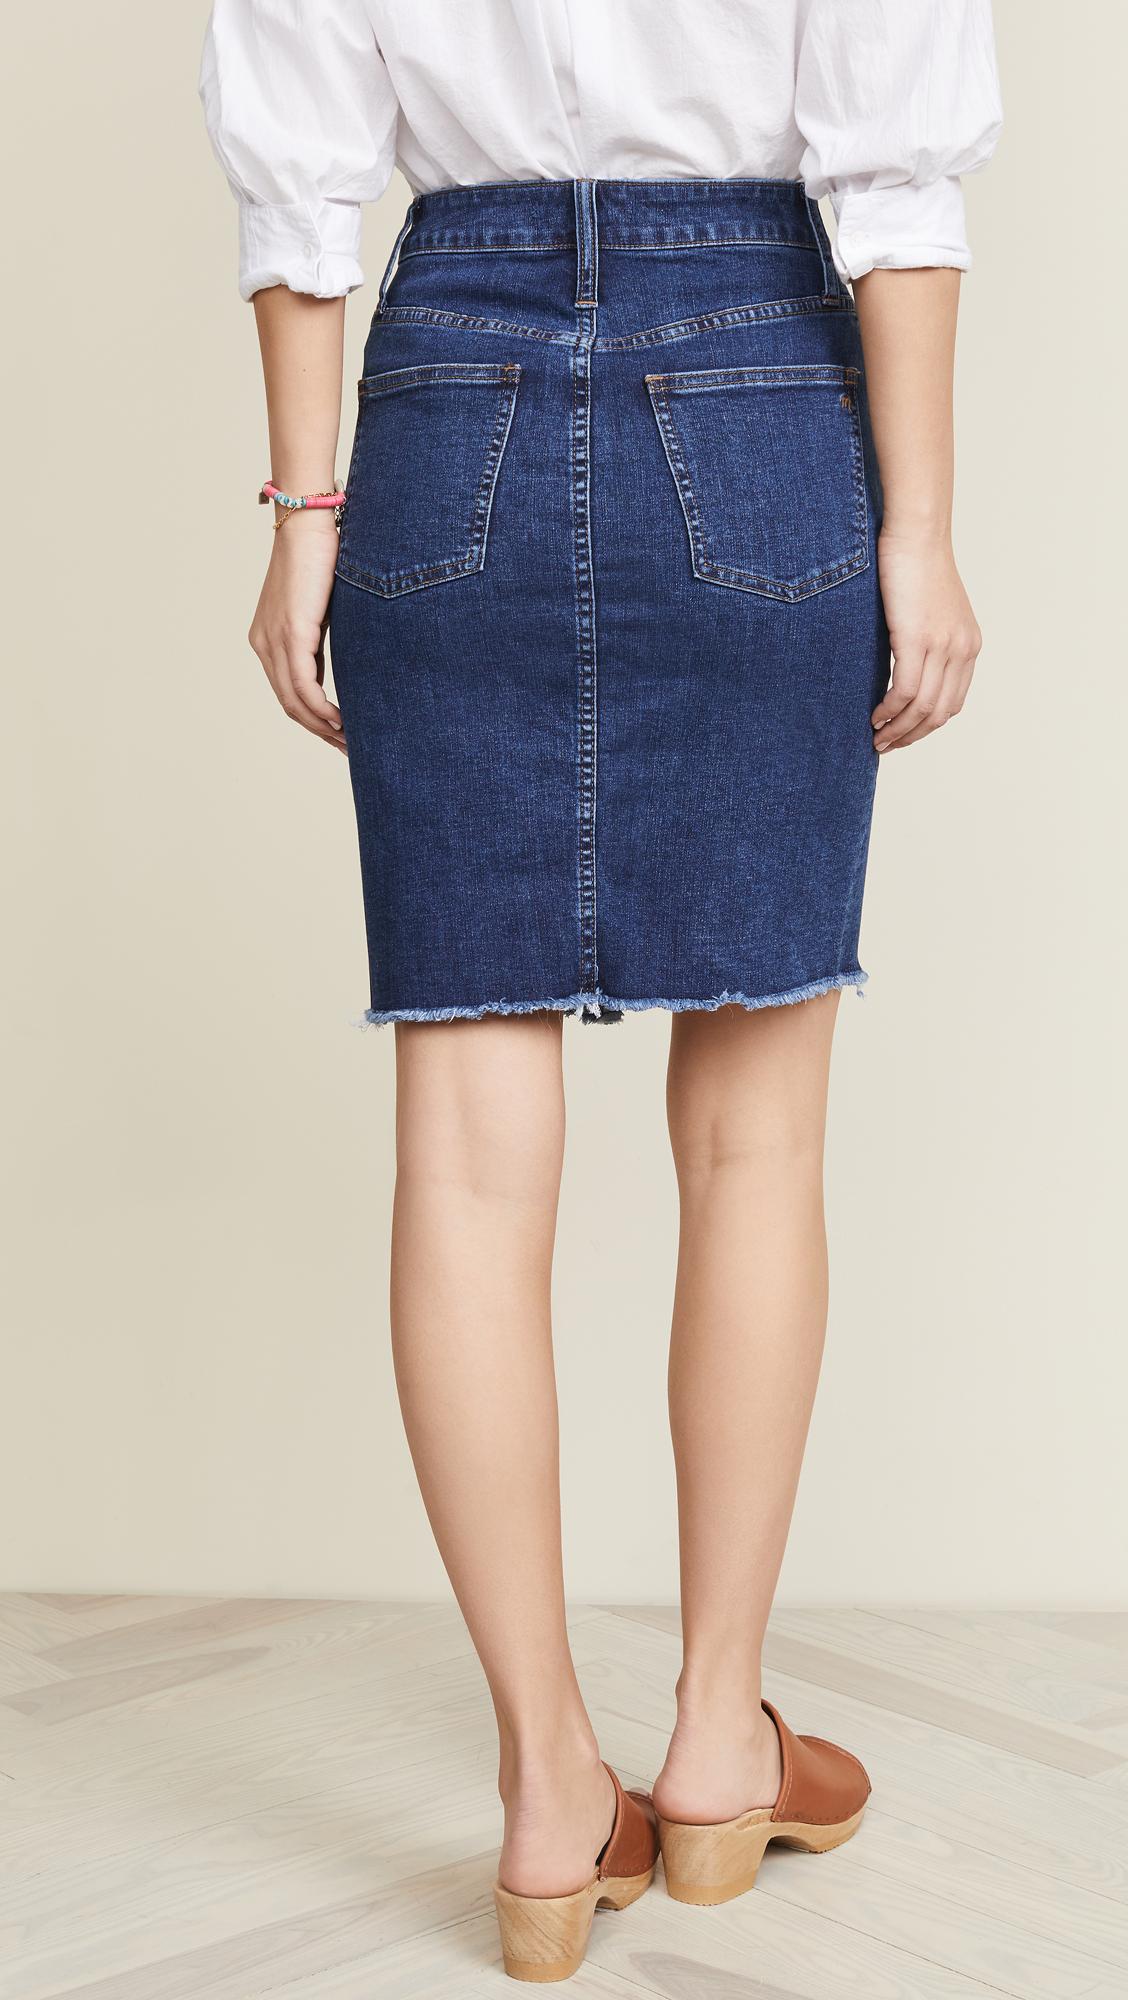 Lyst - Madewell Indigo Cutout Skirt in Blue